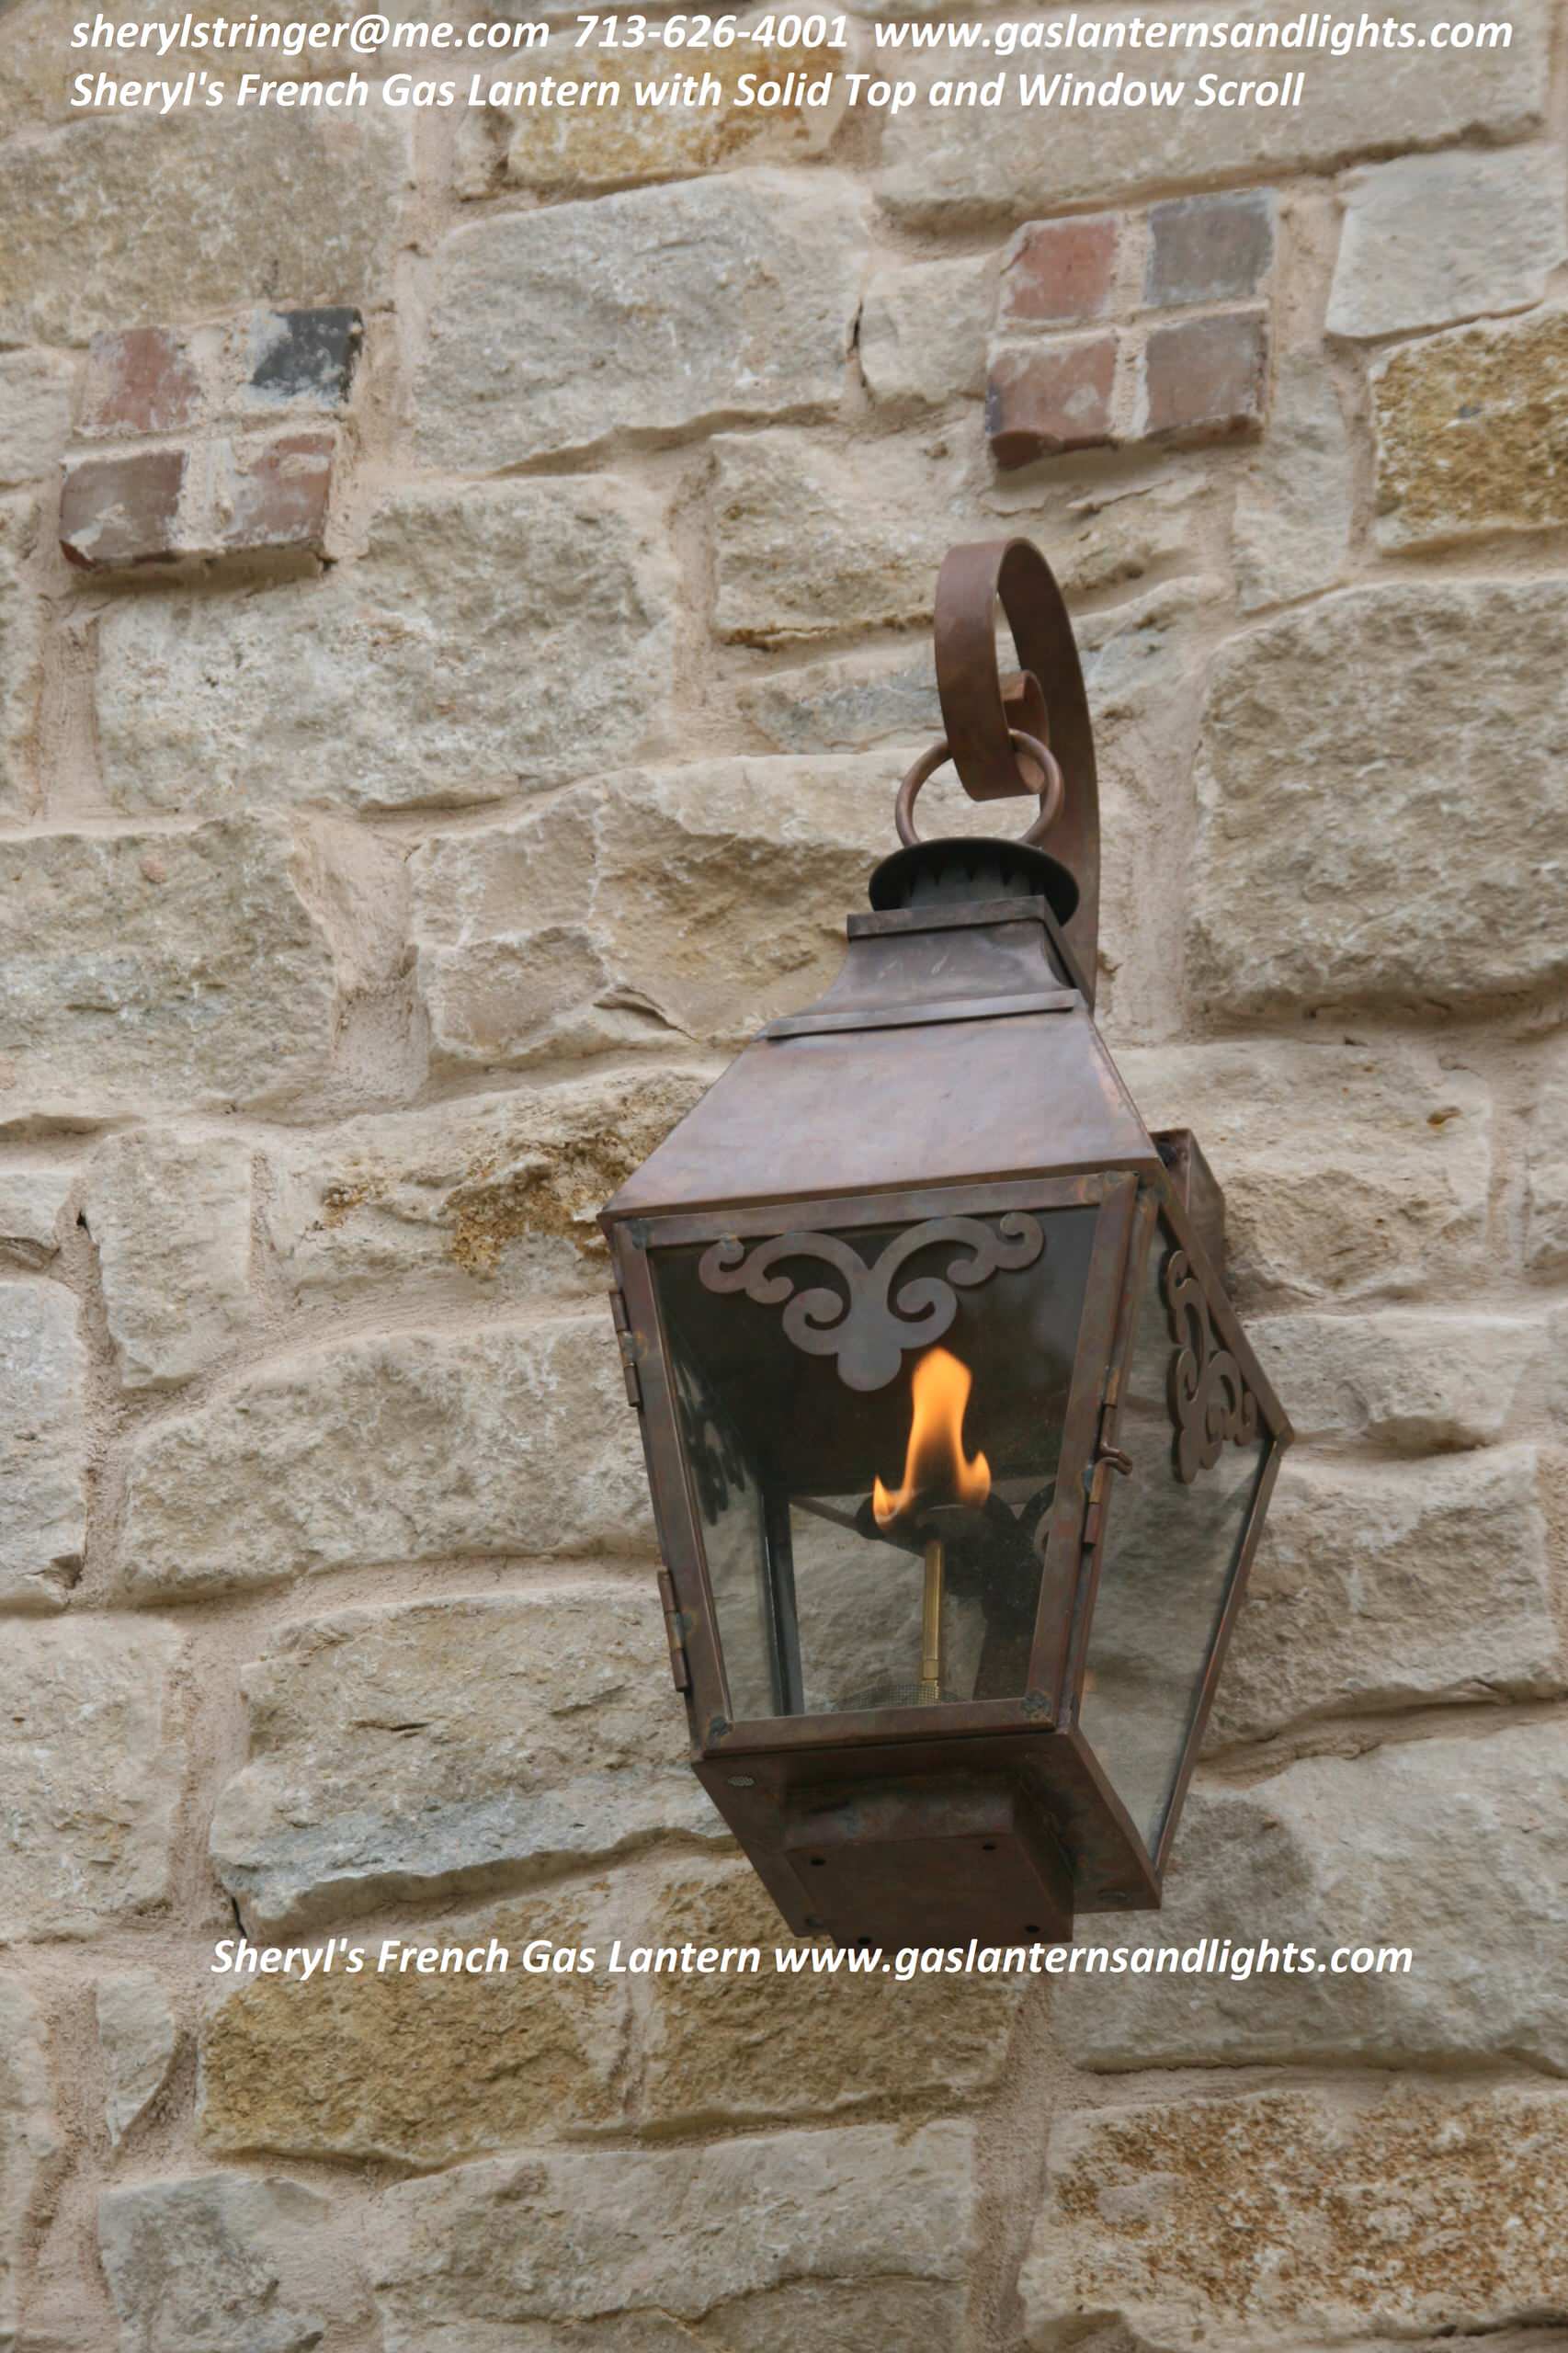 Sheryl's French Gas Lantern with Window Scrolls